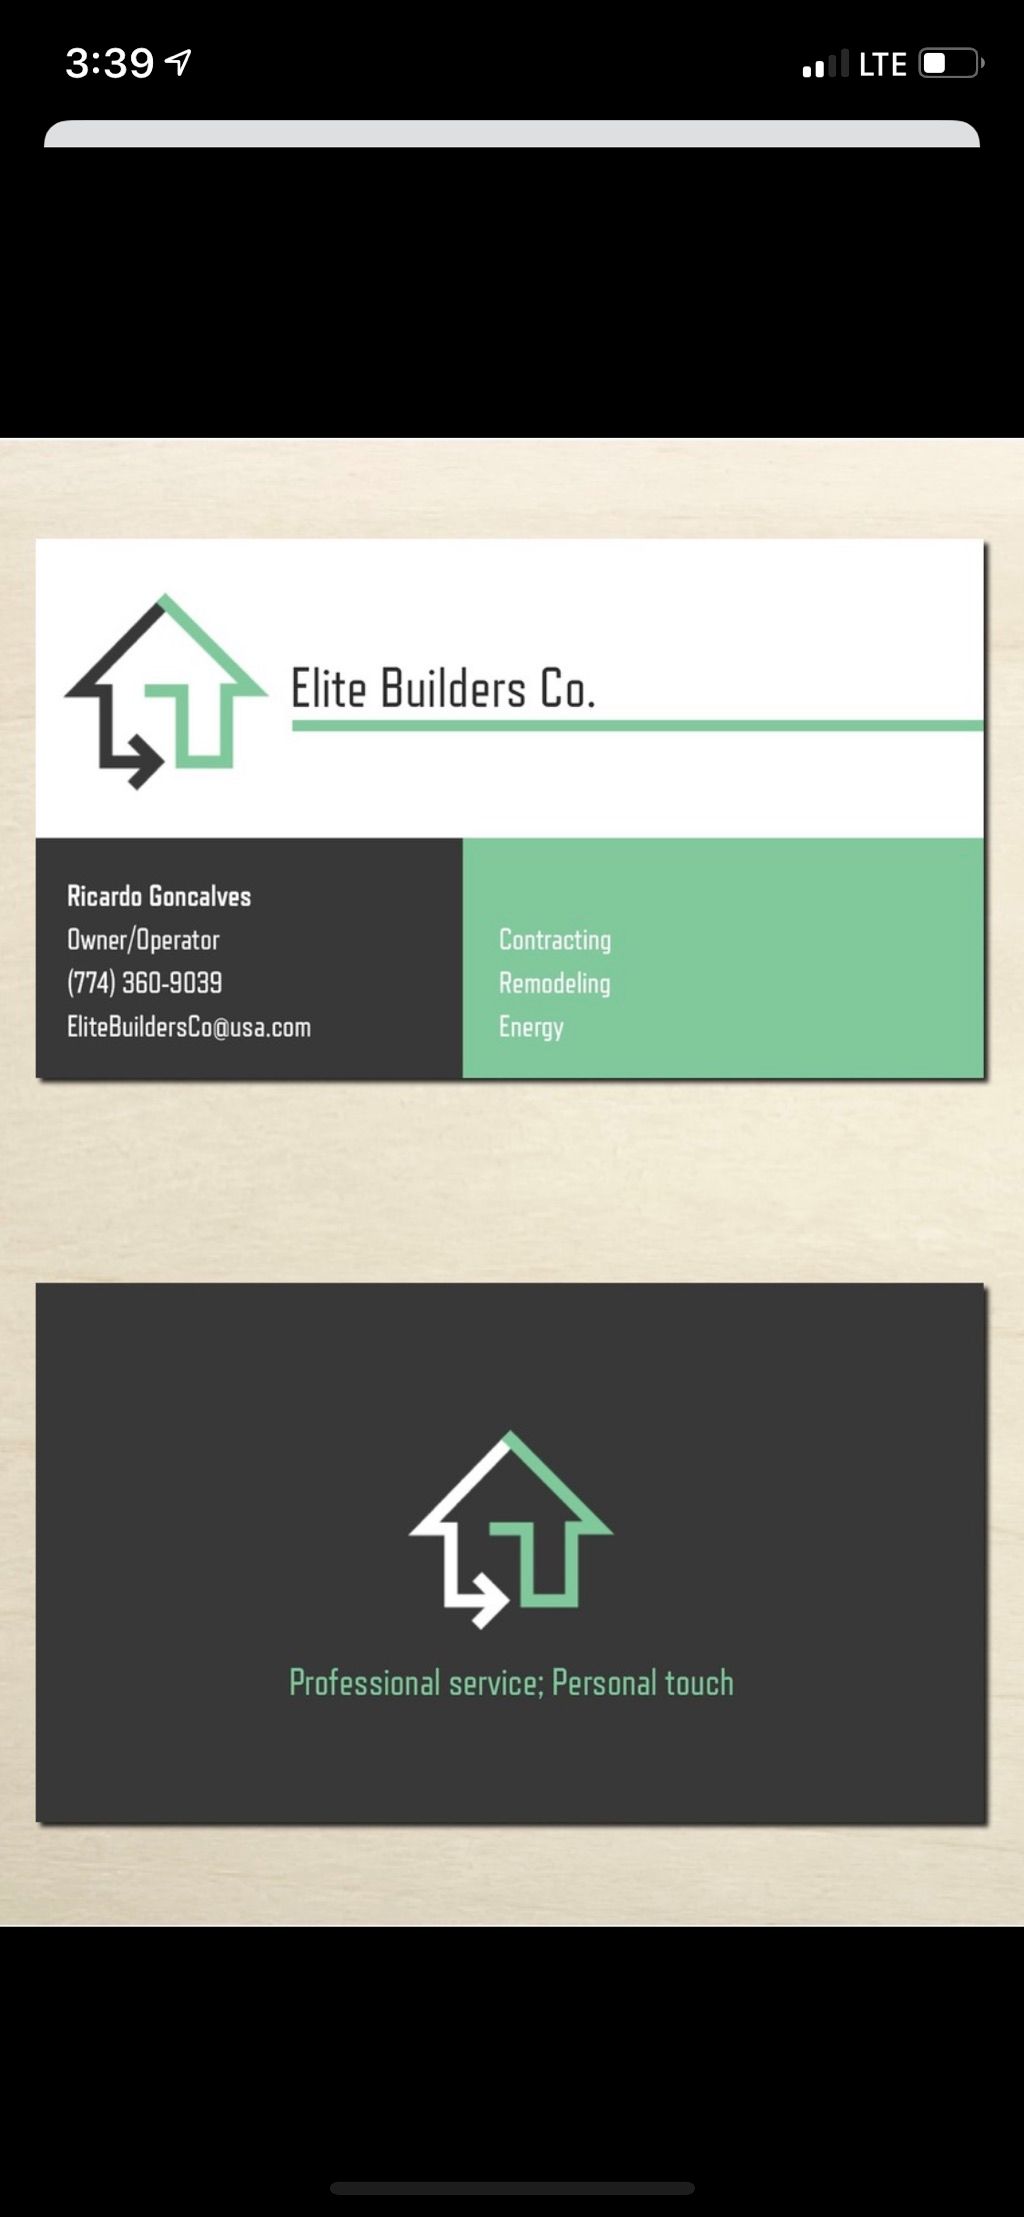 Elite Builders Co.